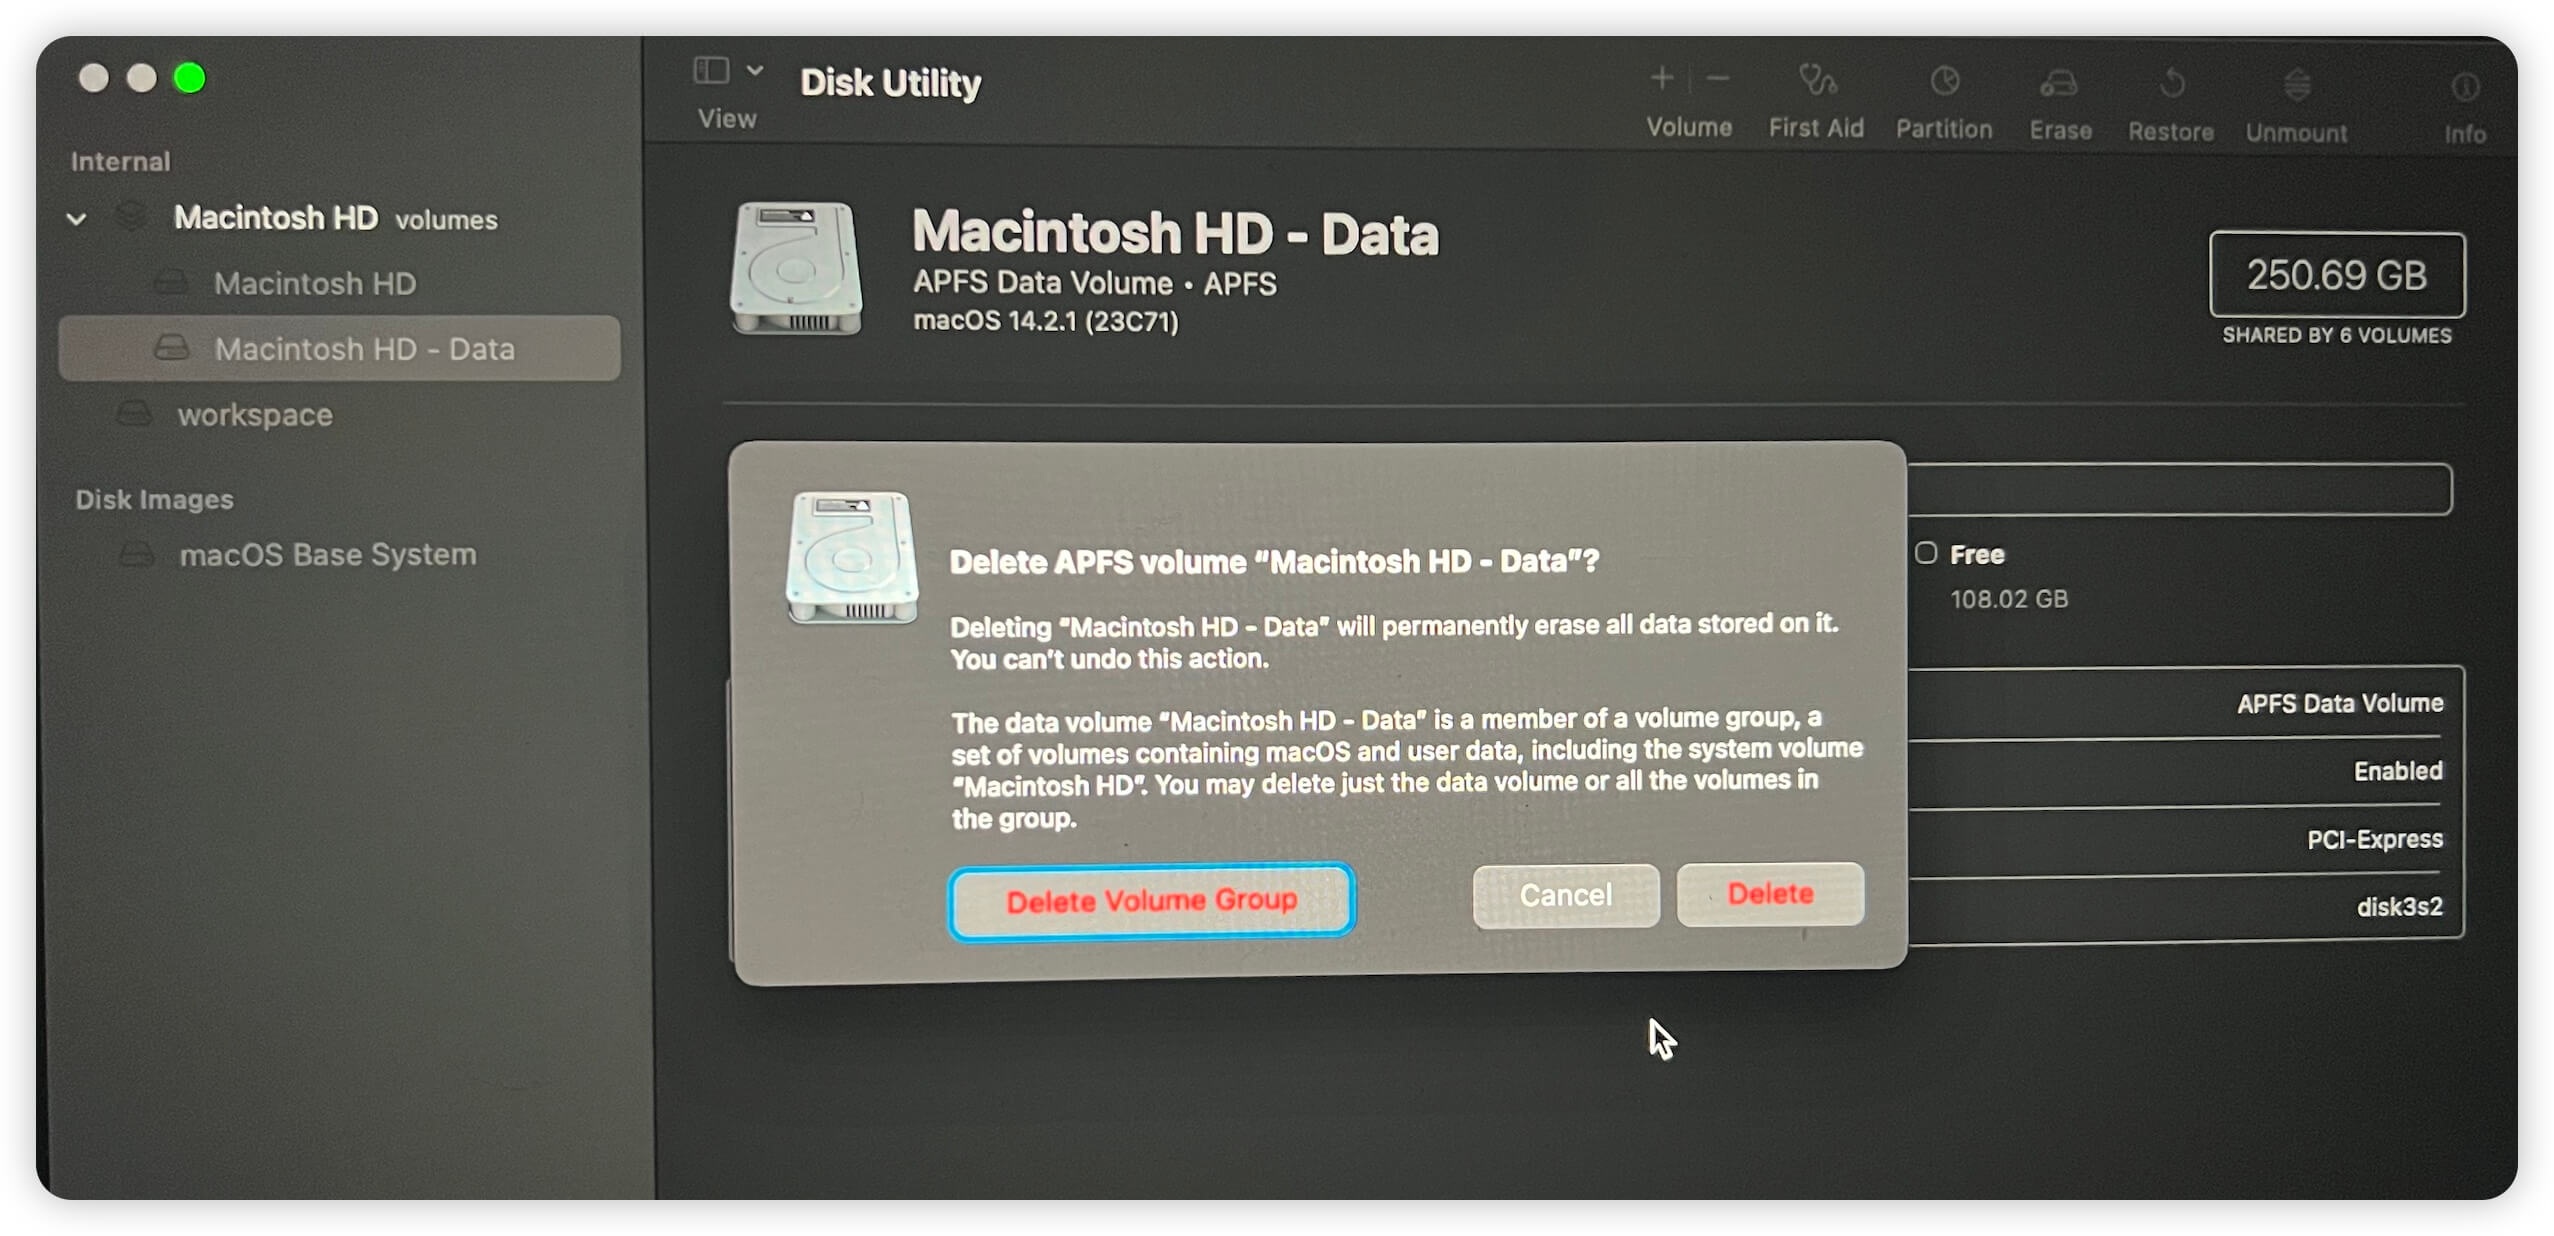 How to delete Macintosh HD Data